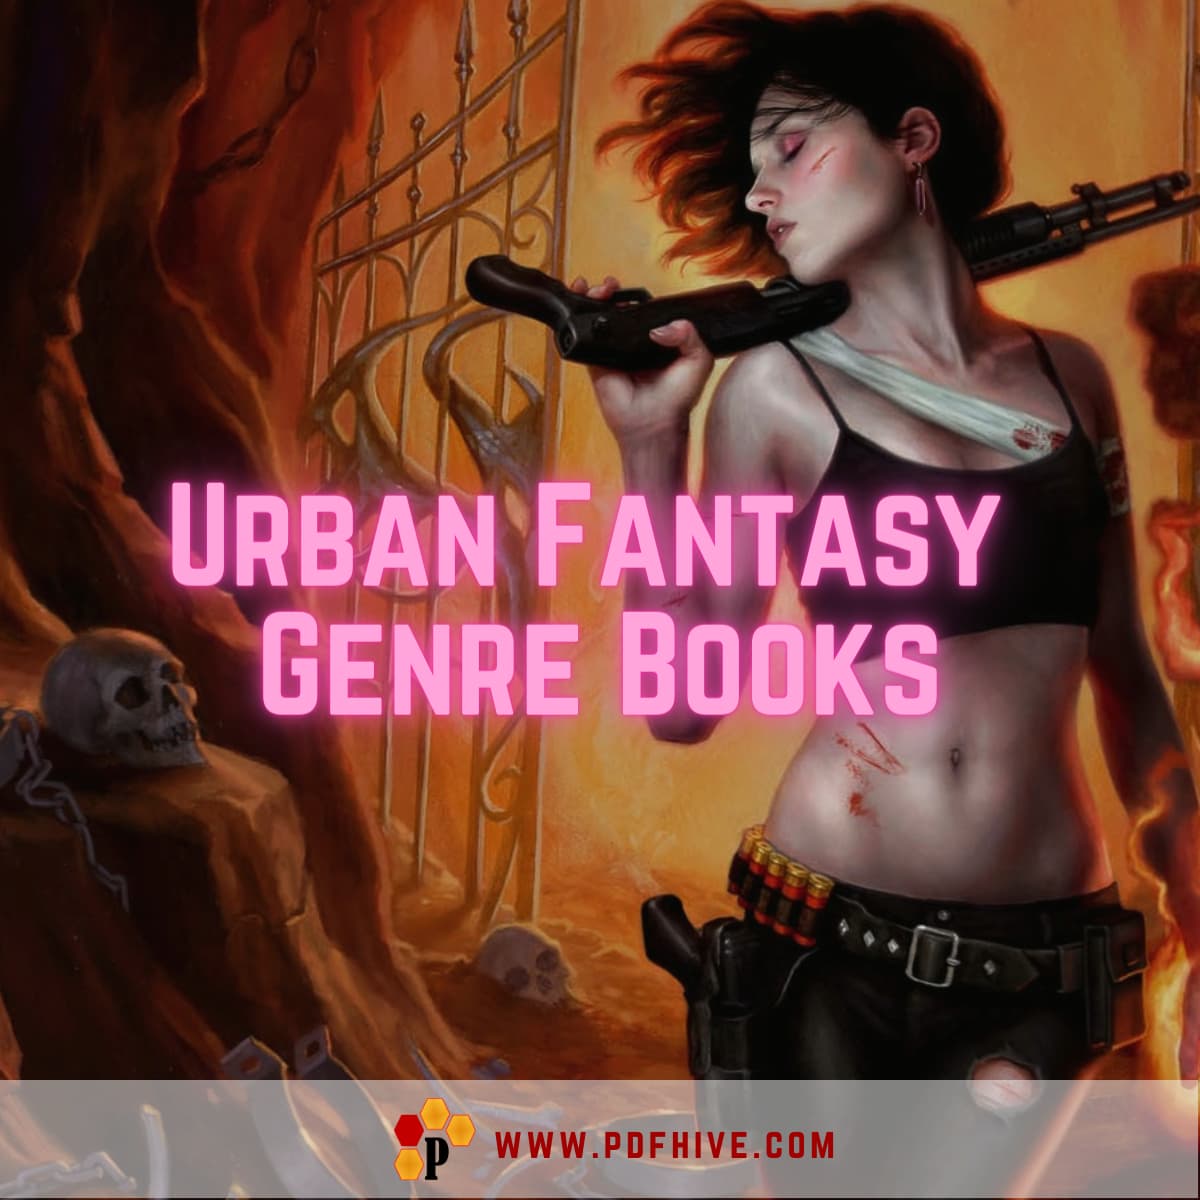 Urban Fantasy books